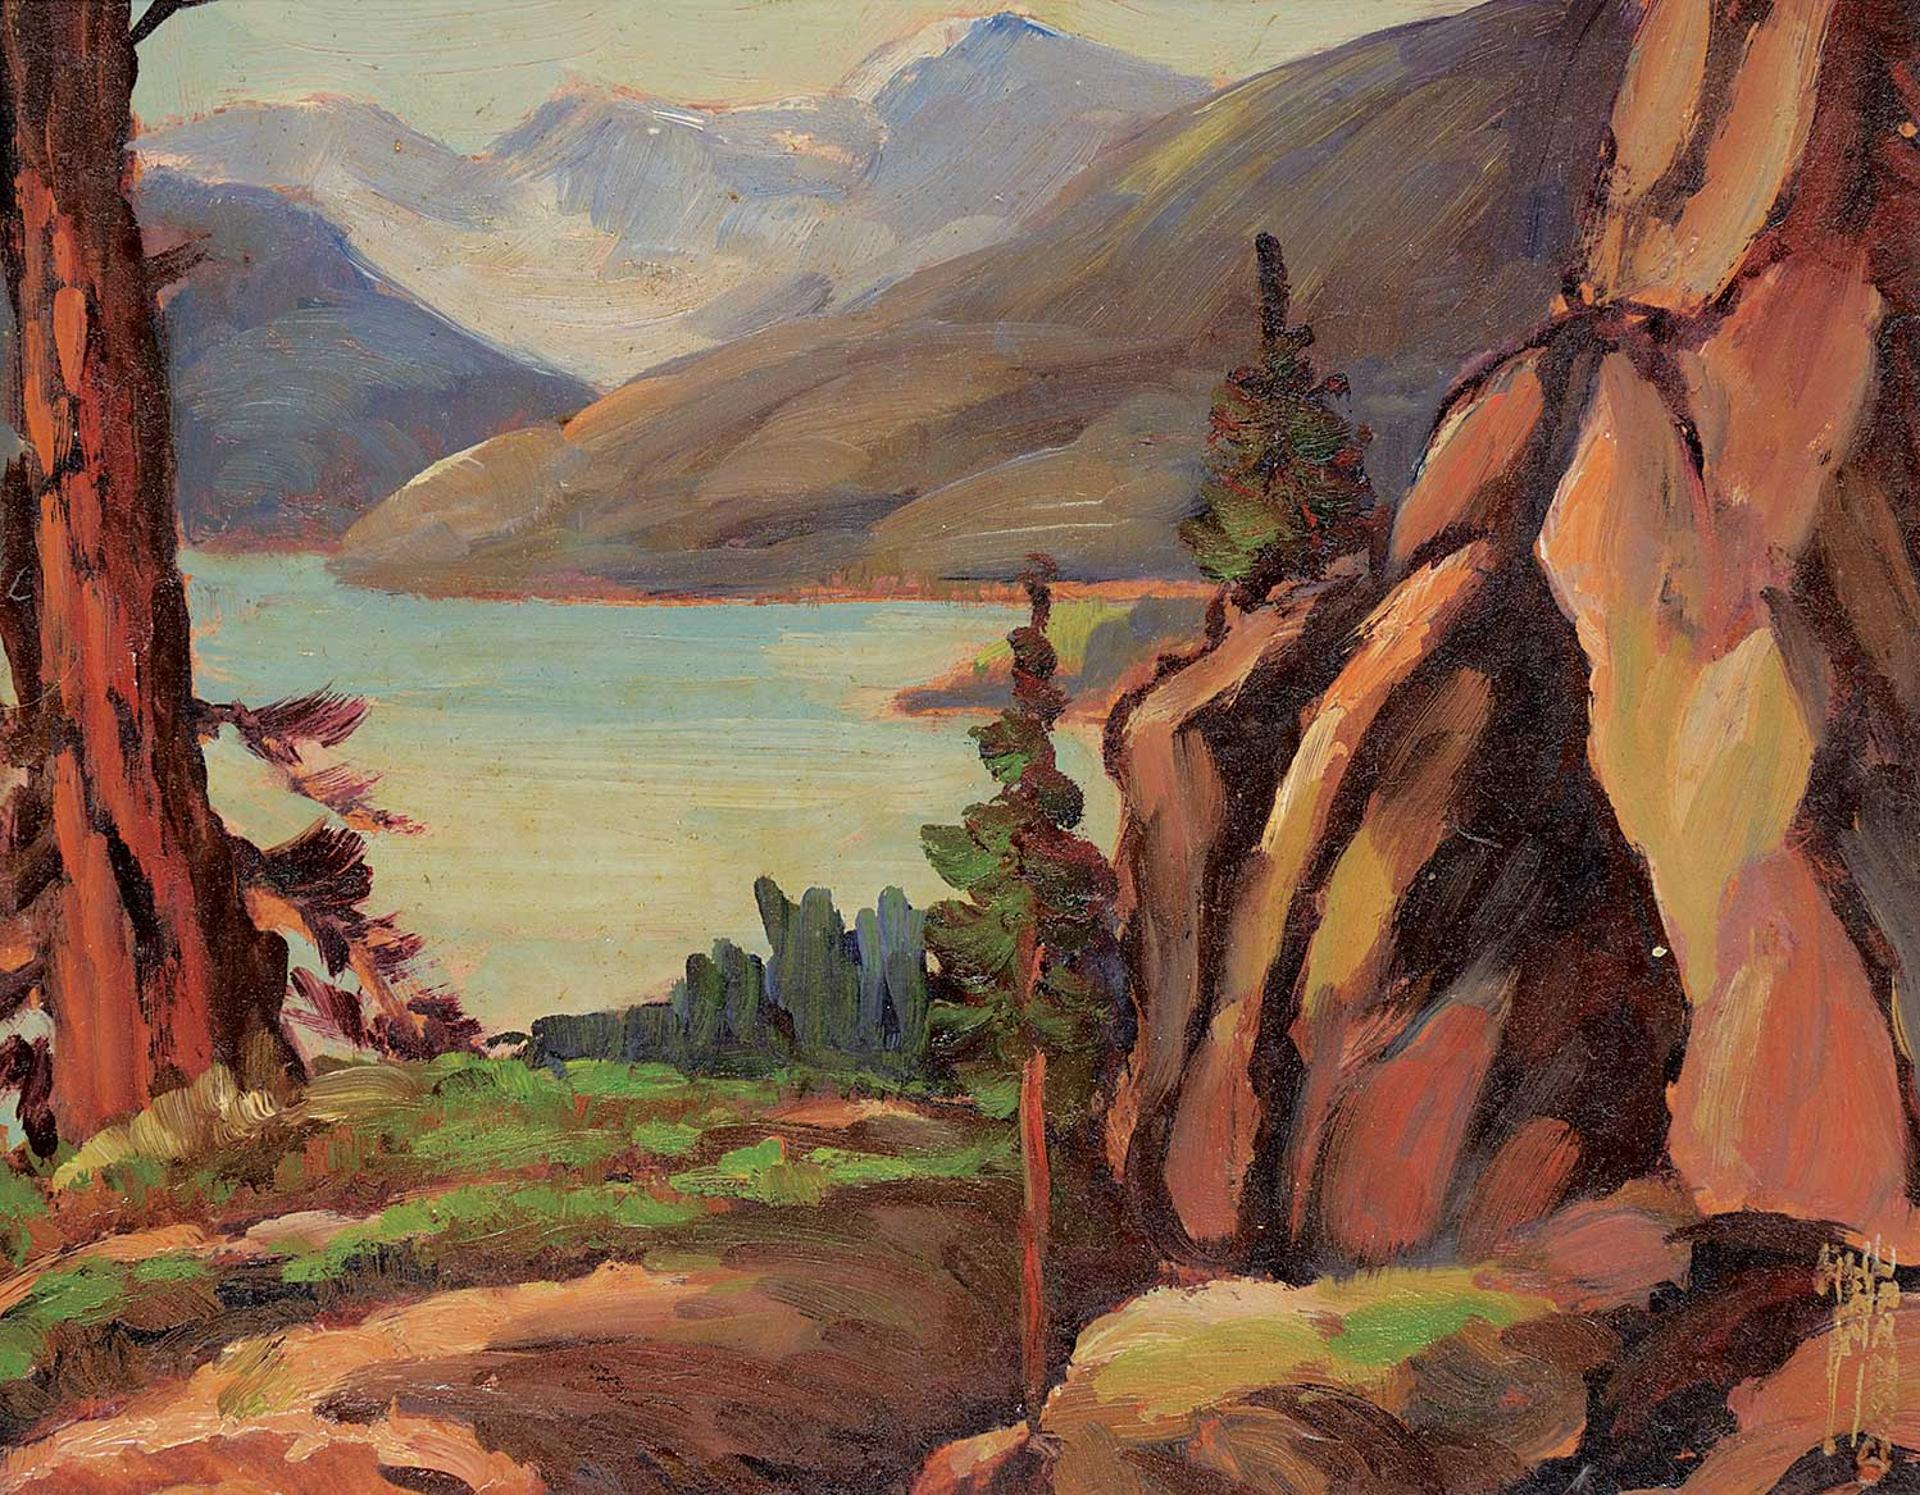 Alec John Garner (1897-1995) - Untitled - Mountain View from the Lake